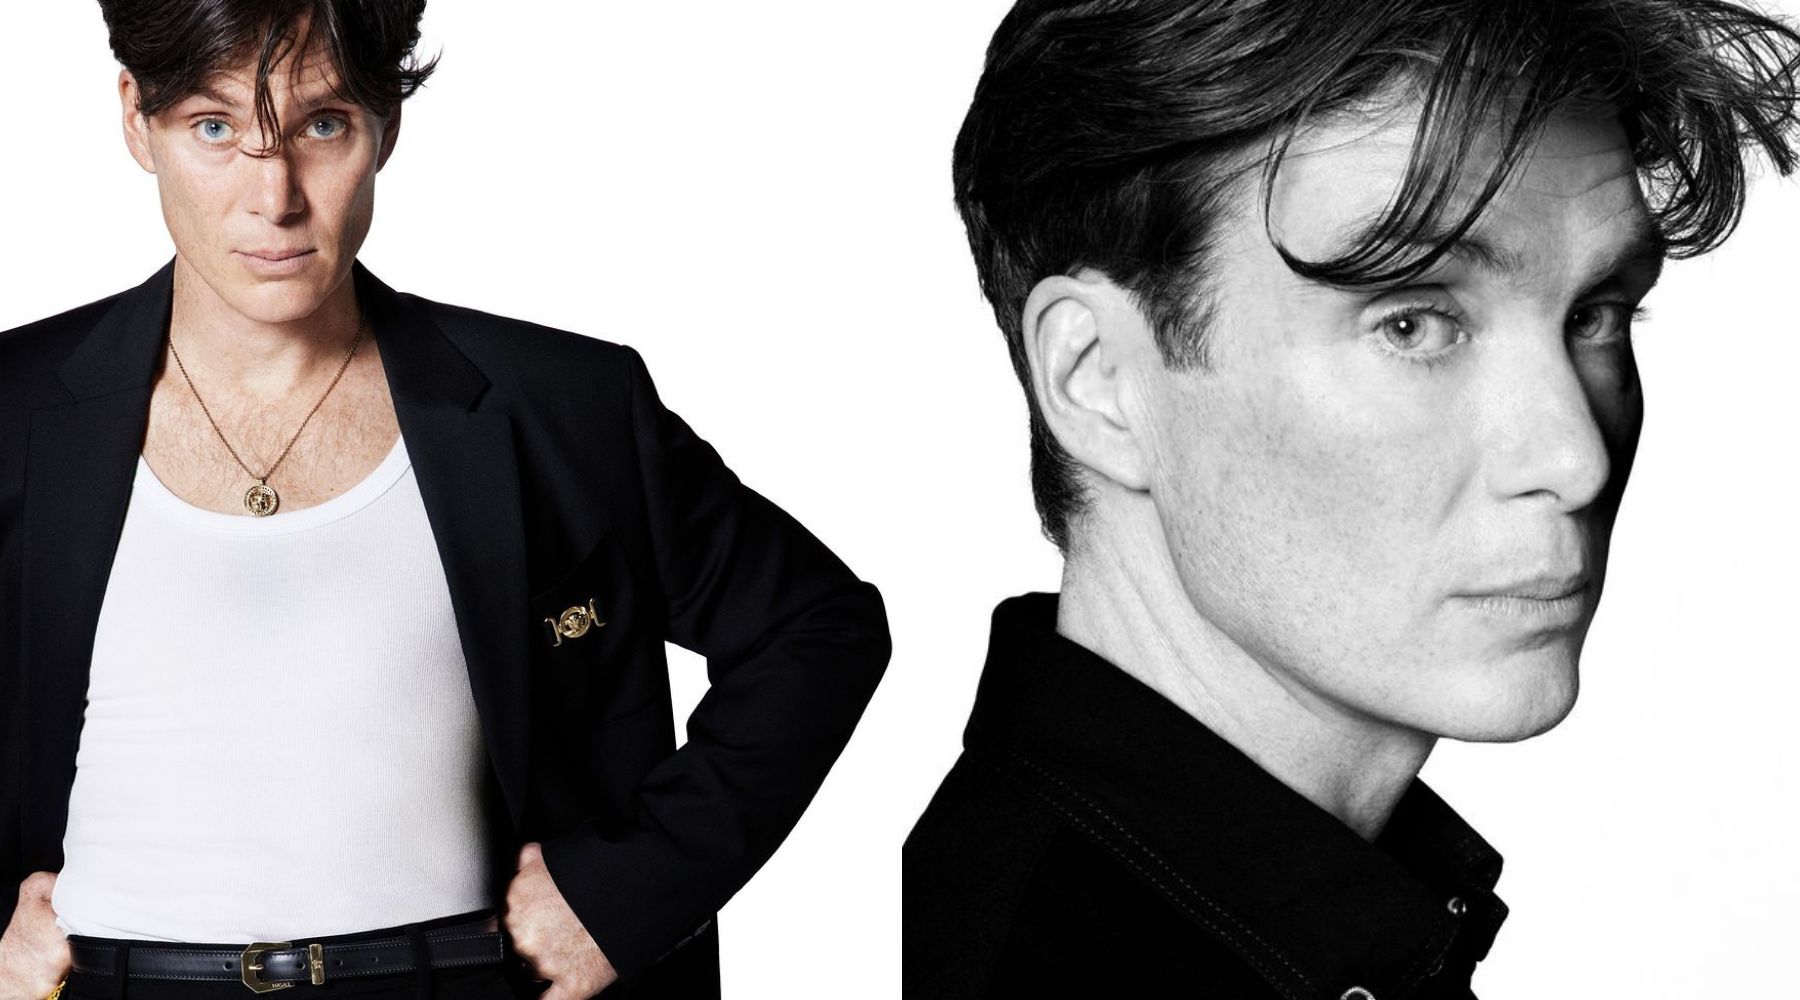 Cillian Murphy v novi vlogi – kot obraz modne hiše Versace